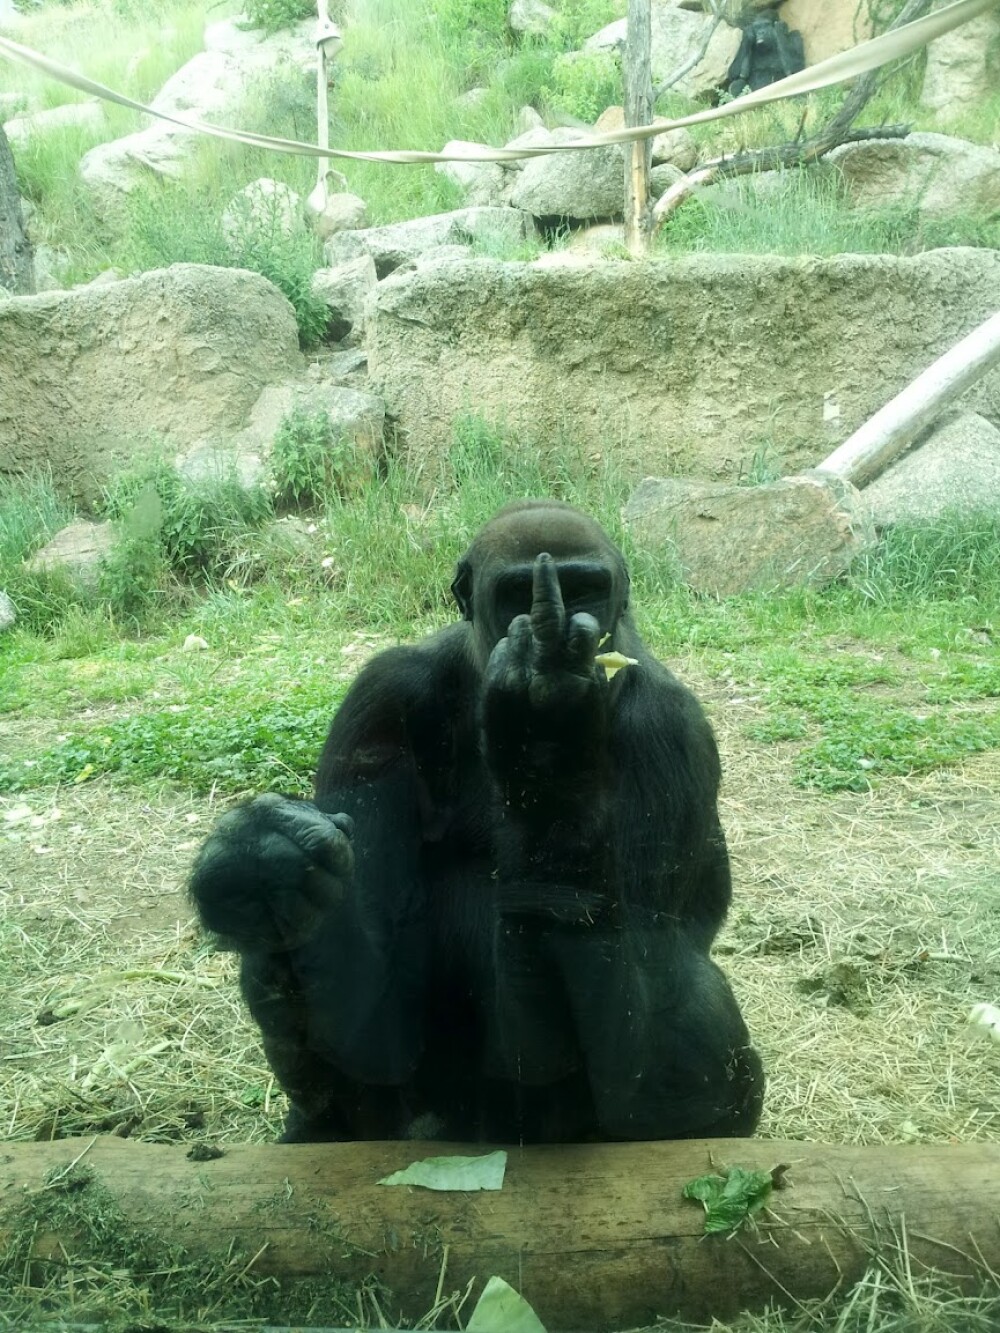 Cum reactioneaza o gorila de la zoo cand vrei s-o pozezi. Gestul obscen facut in fata camerei - Imaginea 1